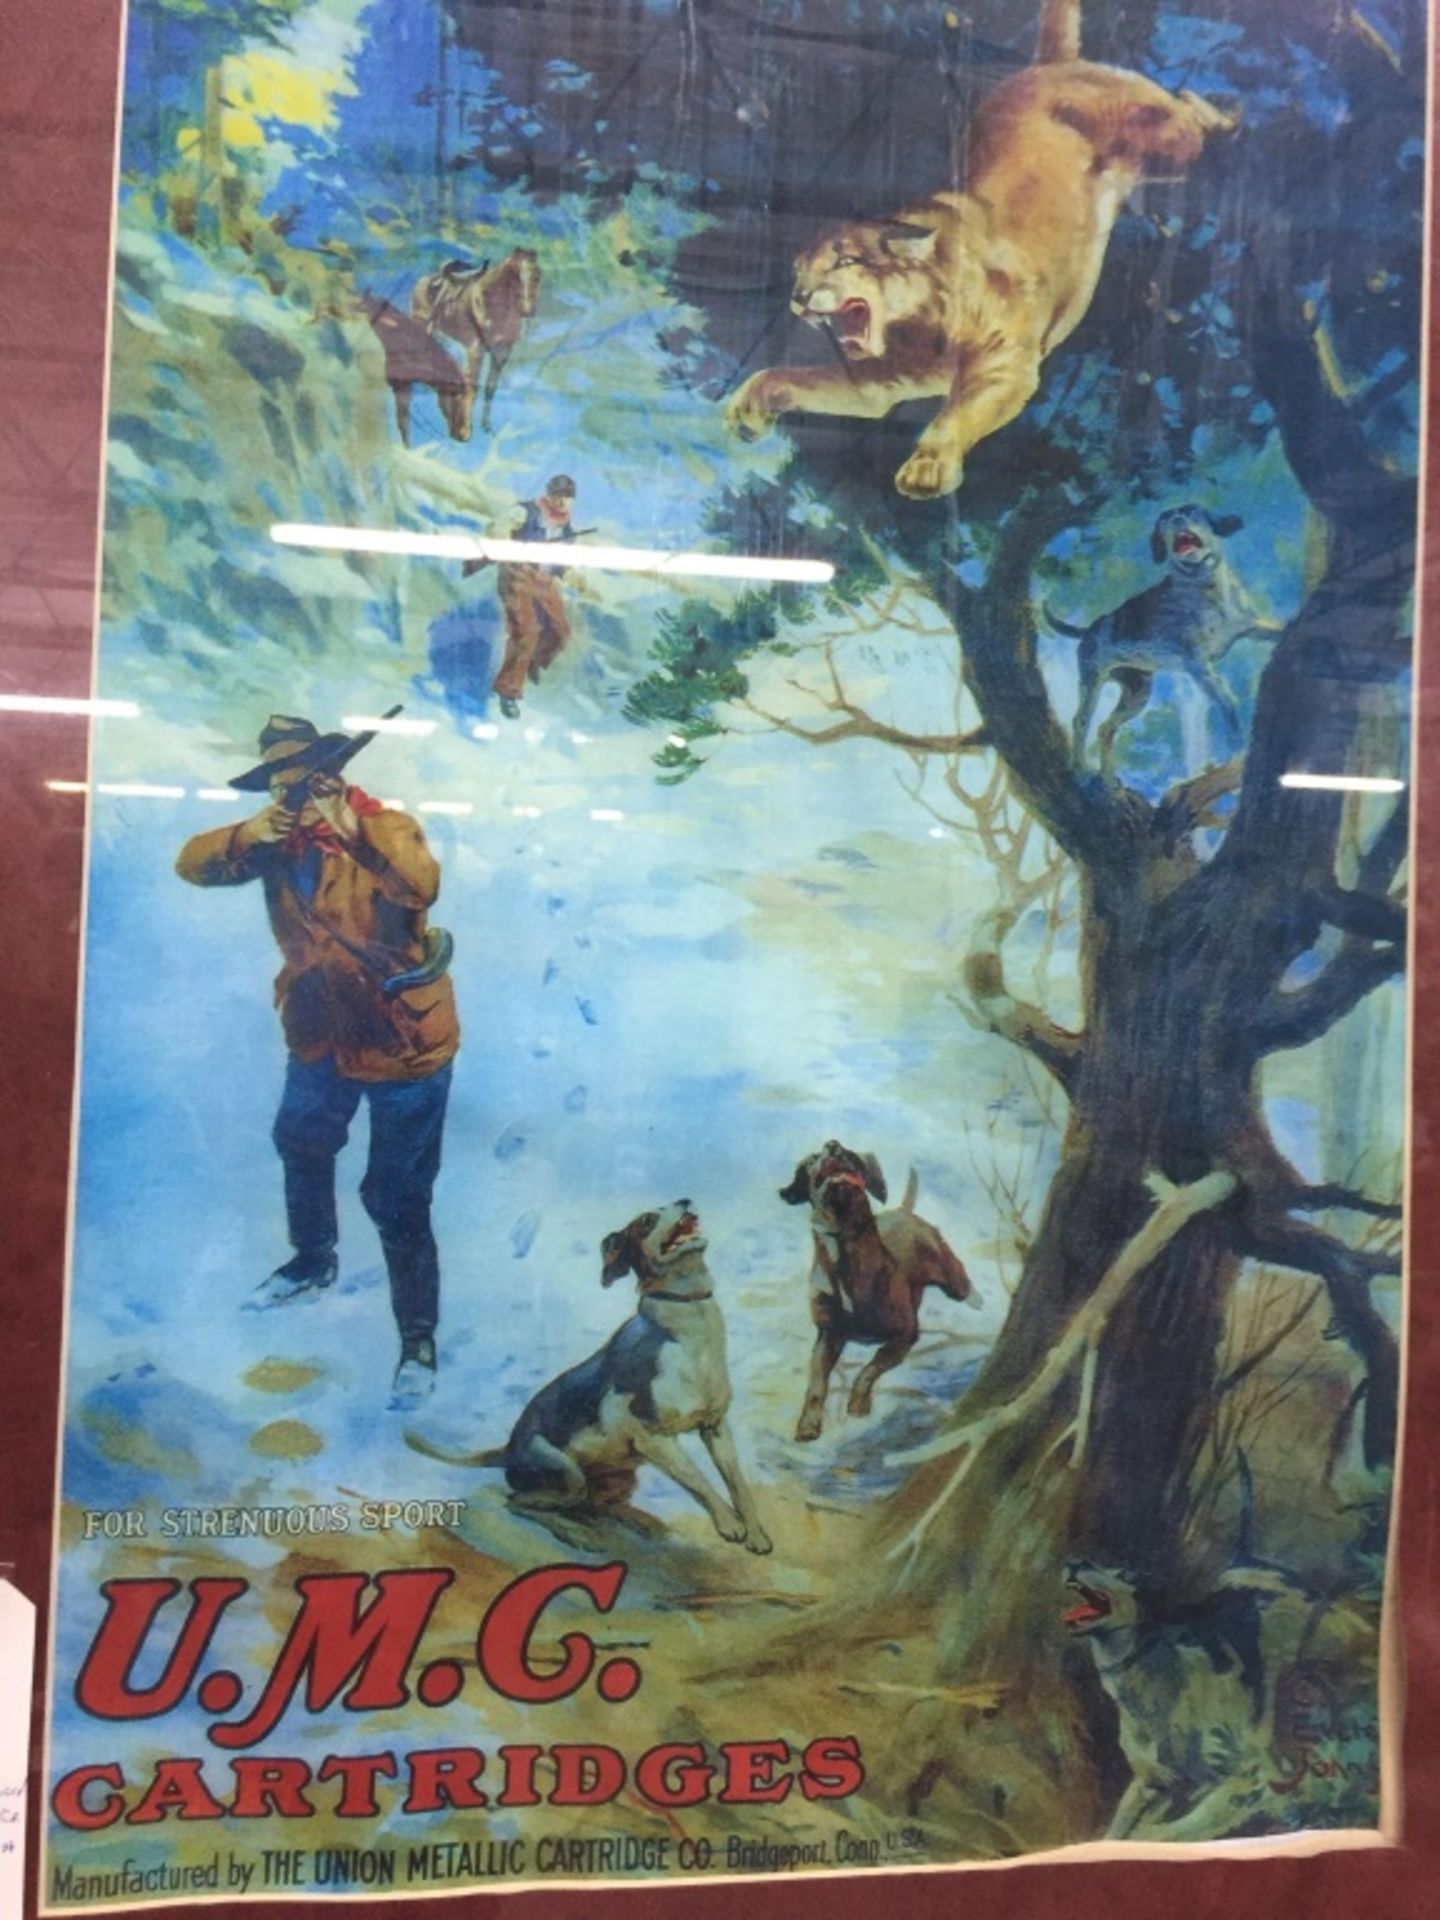 U.M.C Cartridges Poster - Image 5 of 7